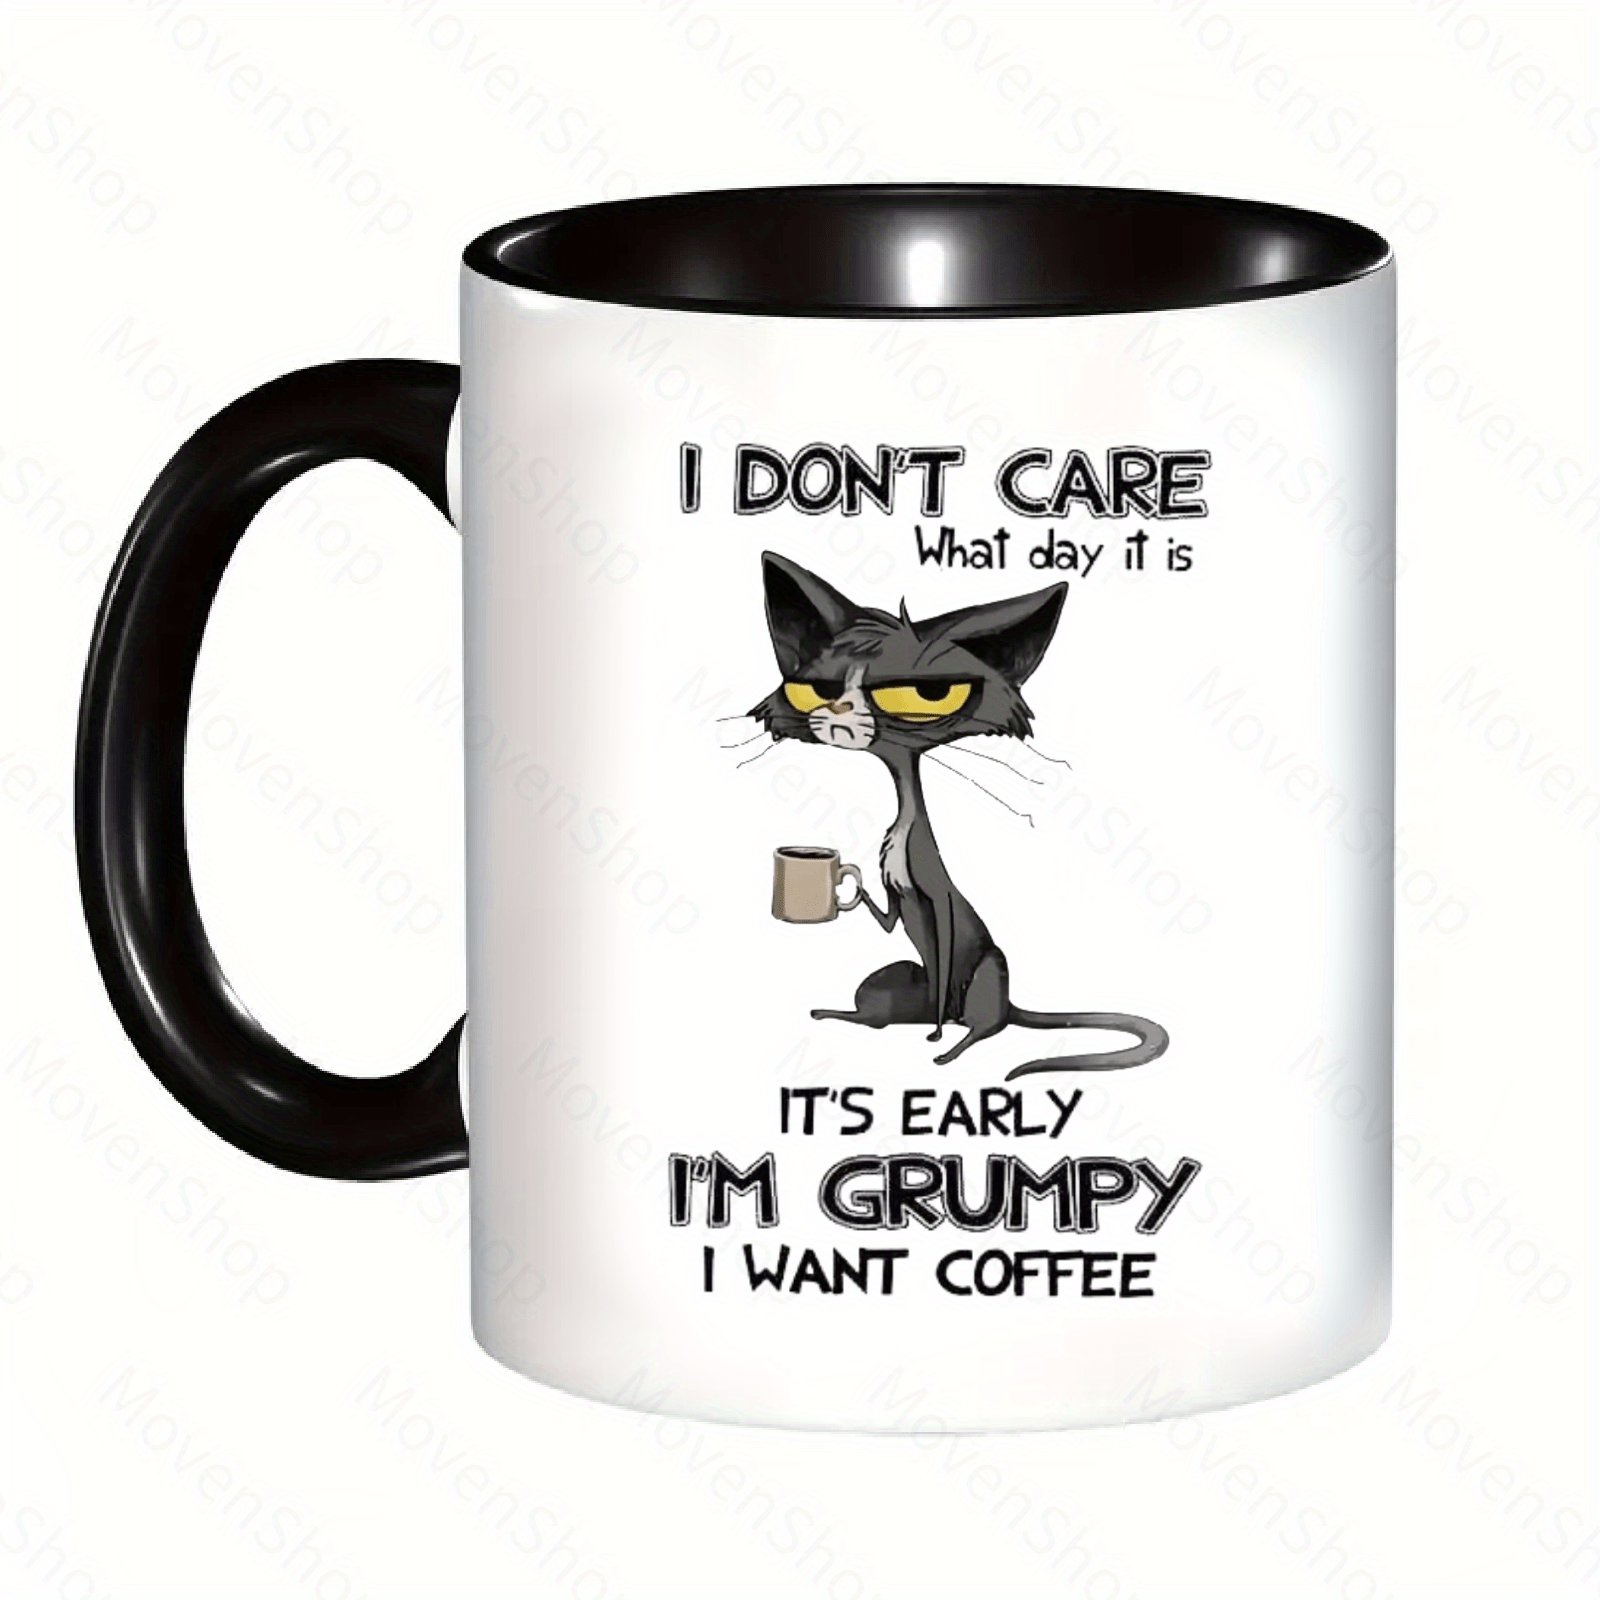 Keep calm and drink tea coffee hot chocolate white mug morning